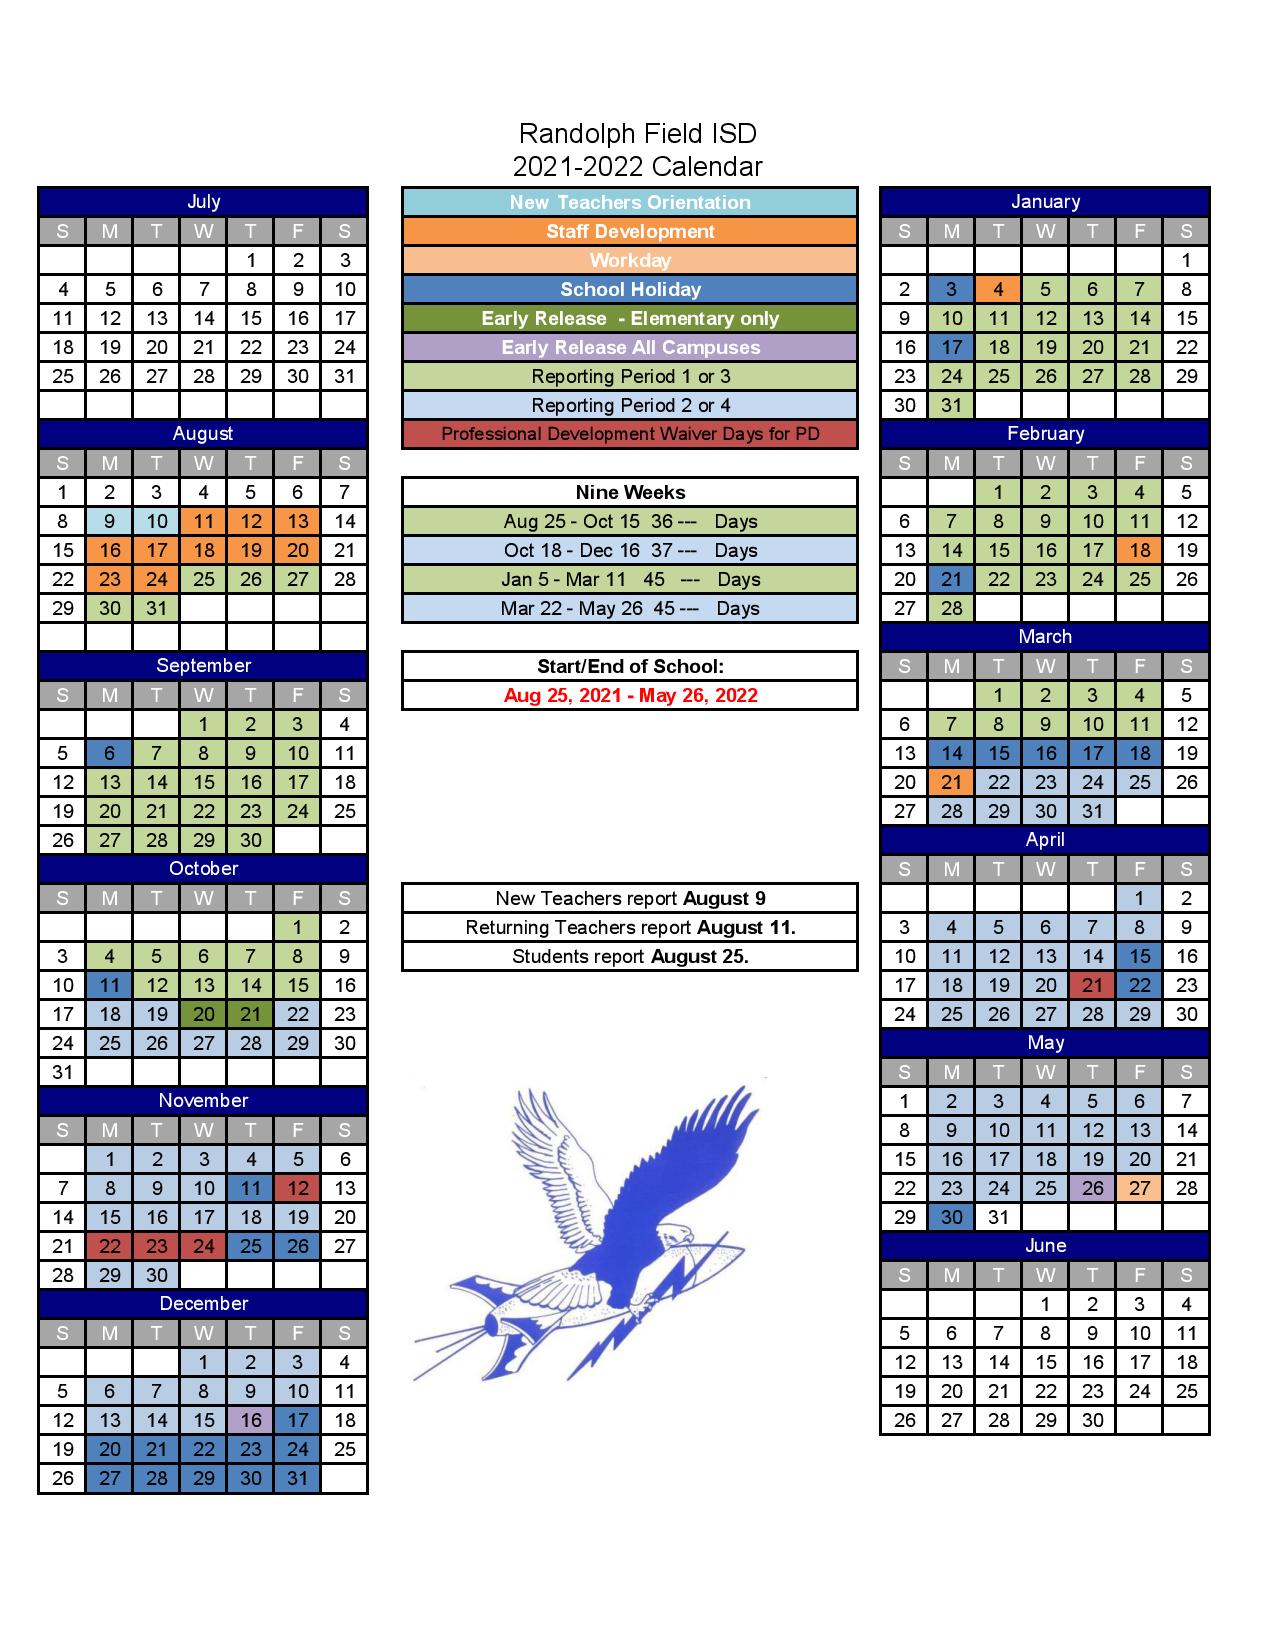 Randolph Field Independent School District Calendar 20212022